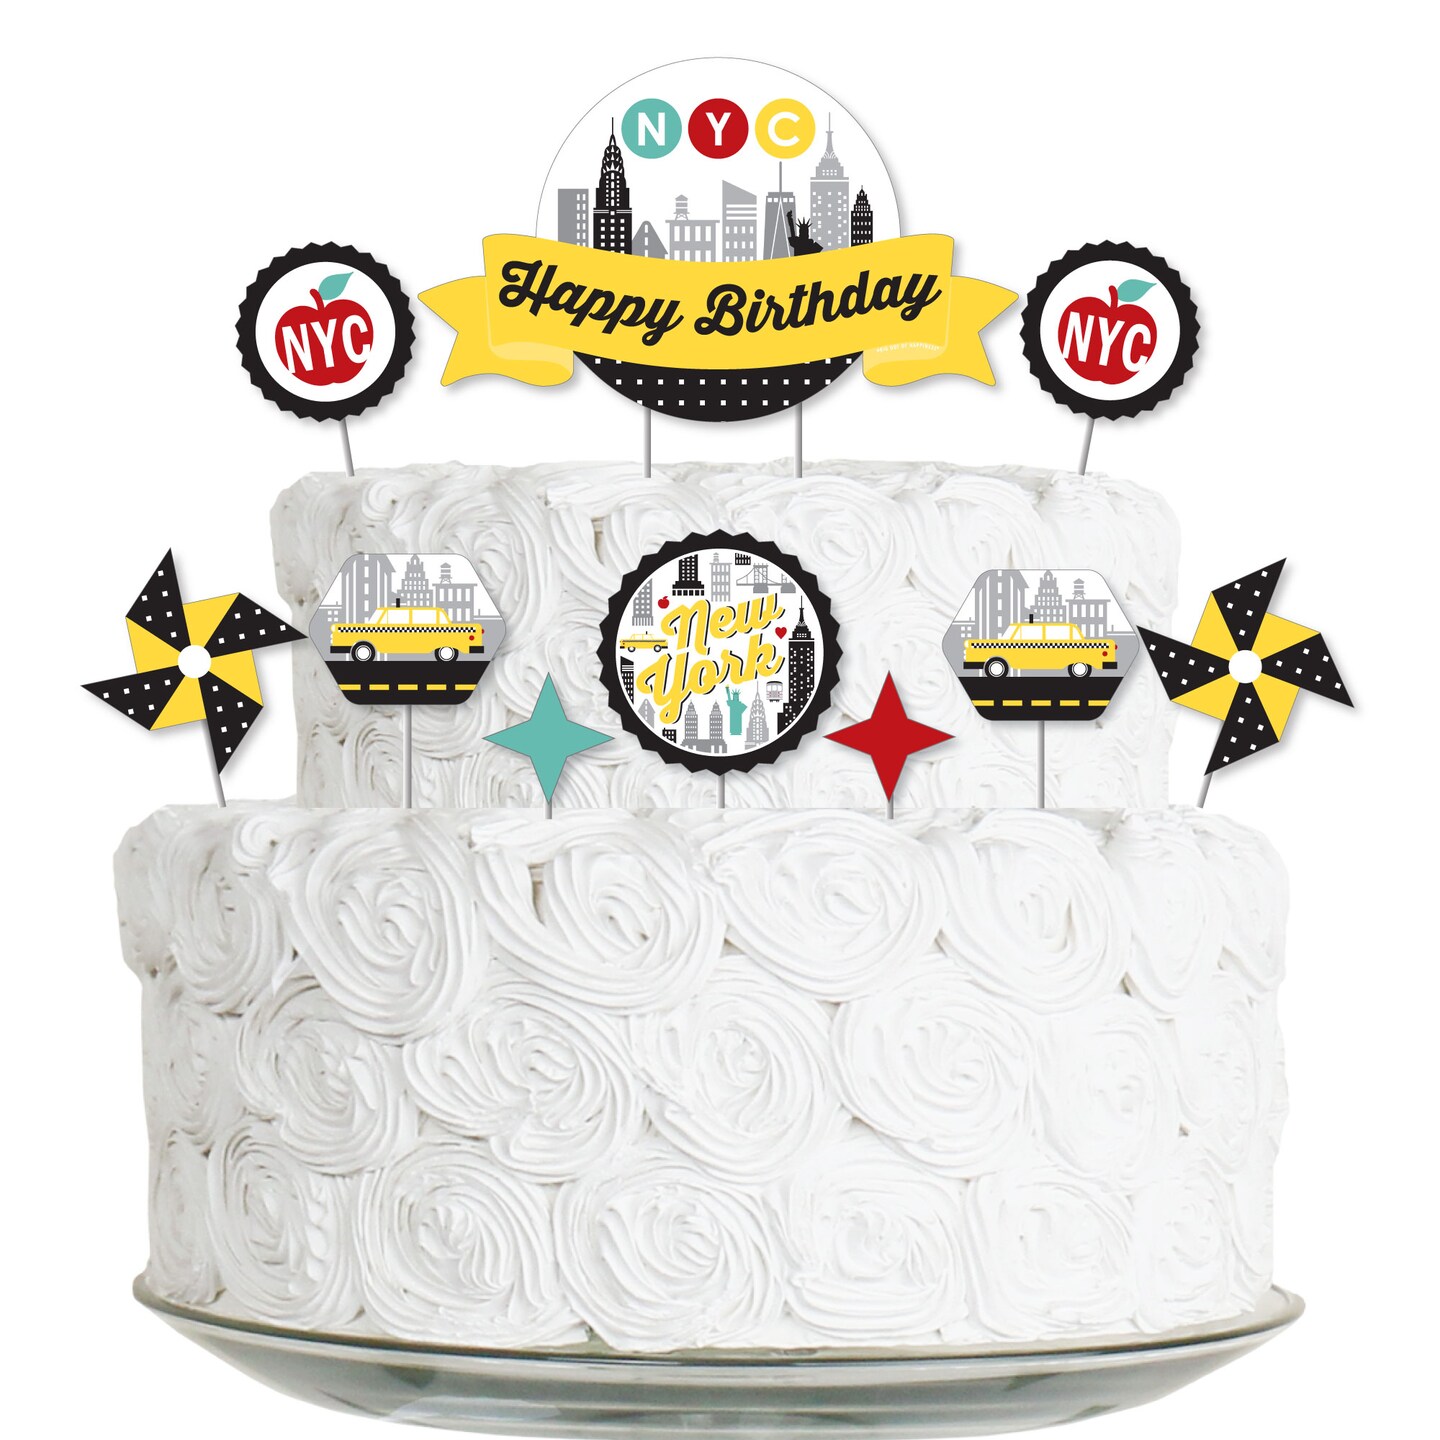 Birthday Cakes for Kids - Custom Cakes NYC Inc.